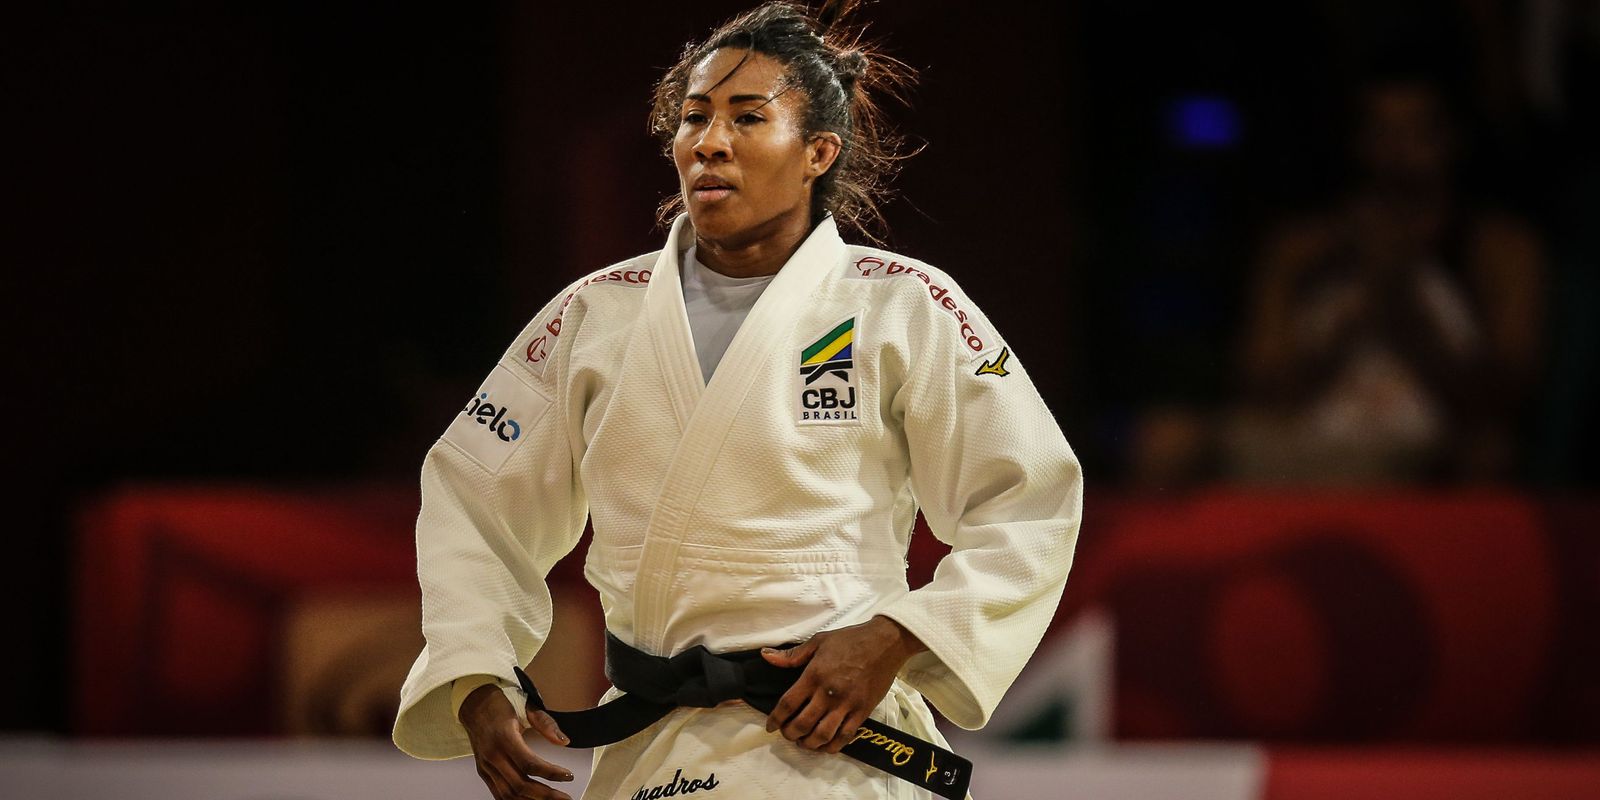 Ketleyn Quadros is silver and Tamires Crude bronze in Judo Grand Slam